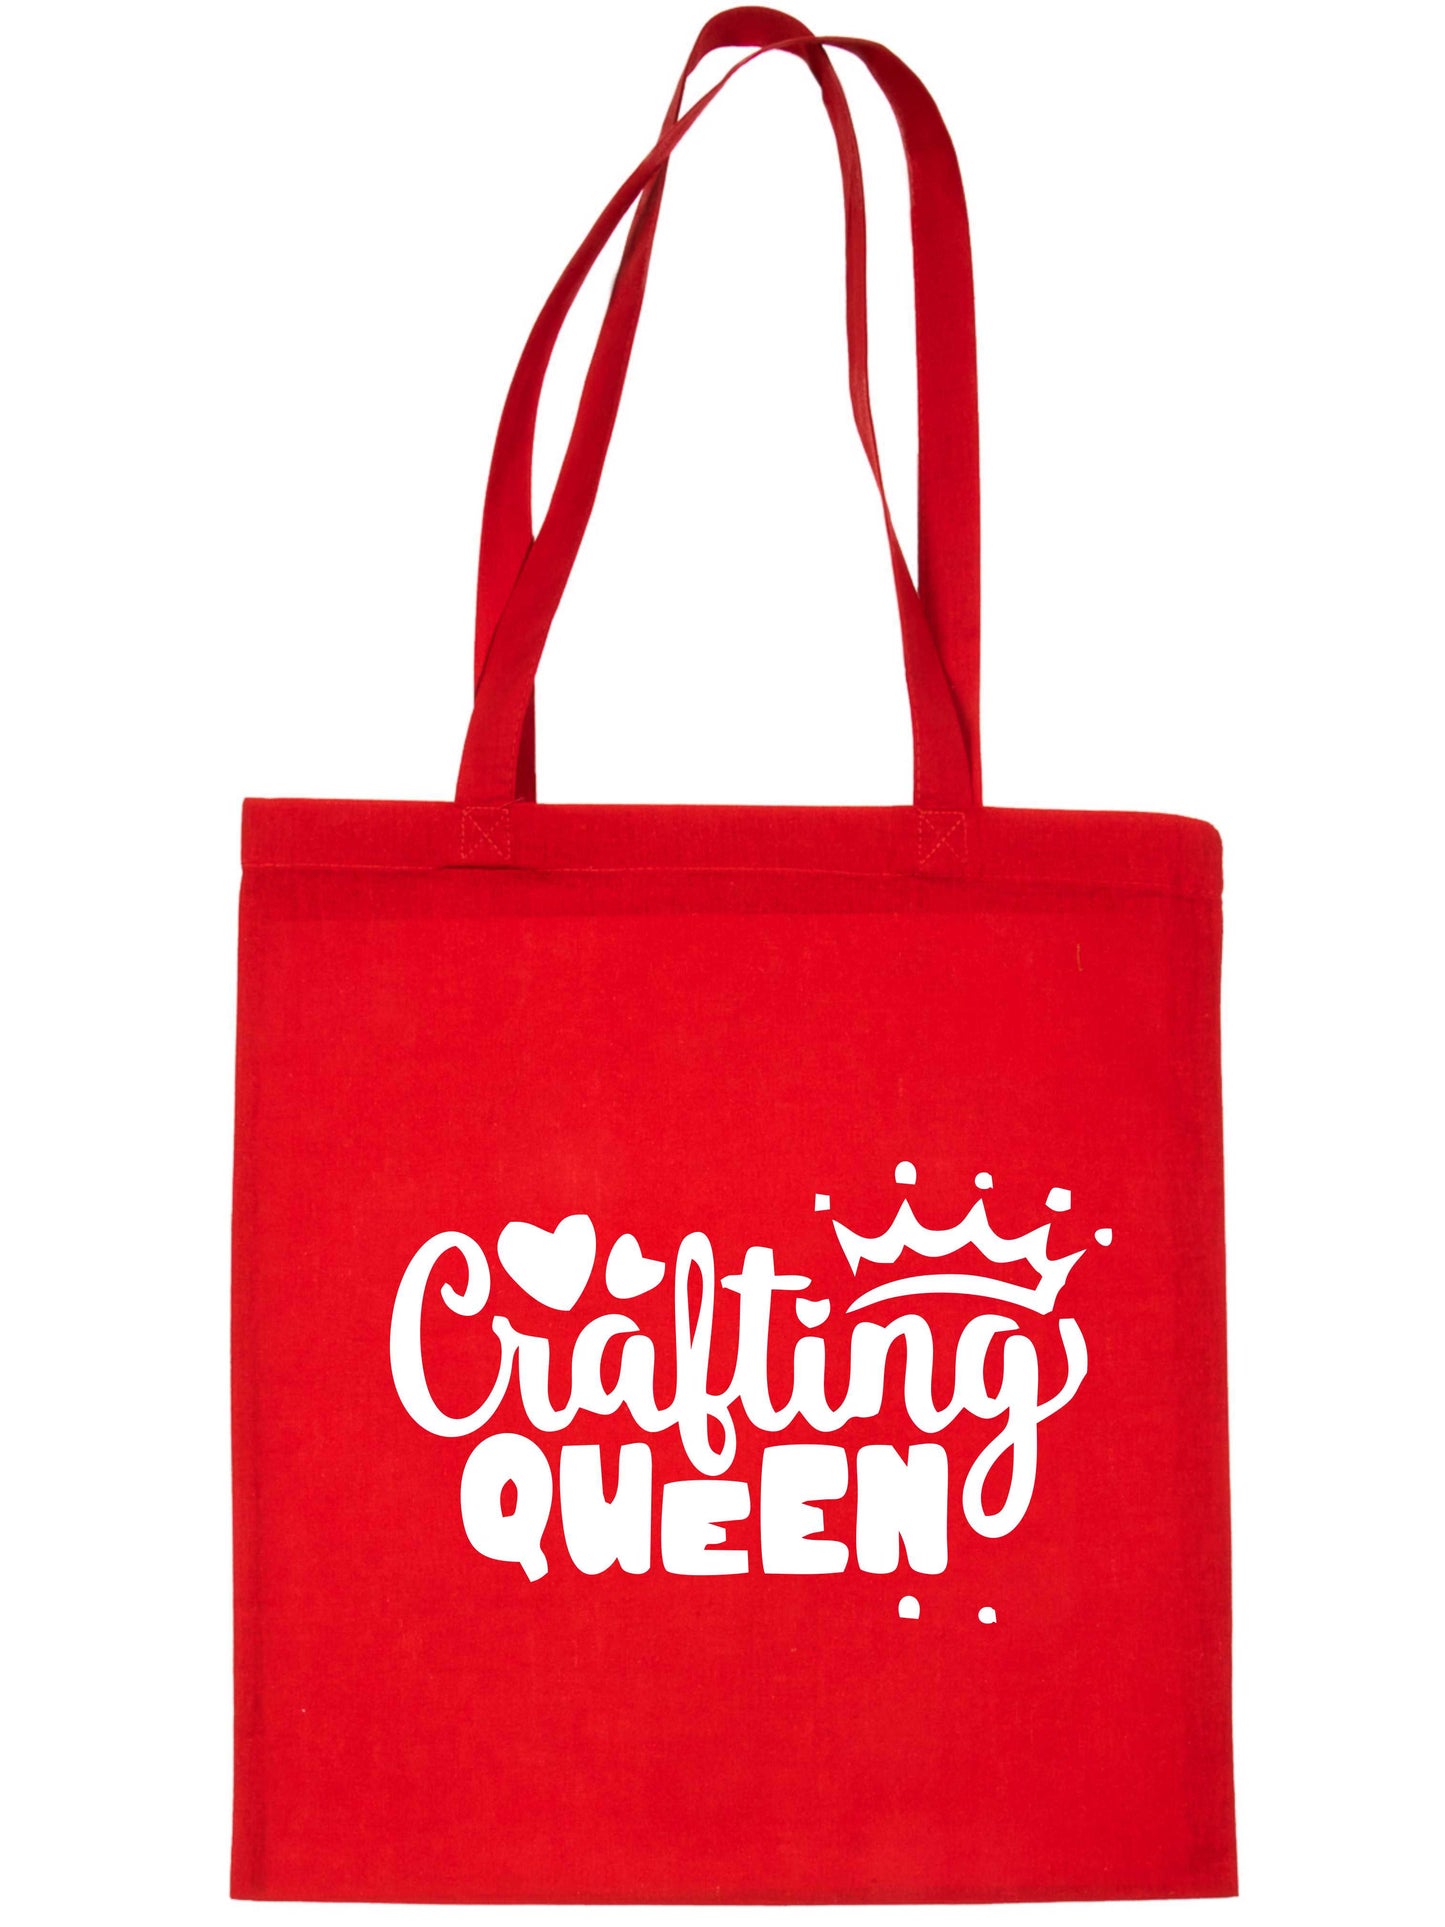 Crafting Queen Knitting Crochet Slogan Ladies Reusable Shopping Tote Bag